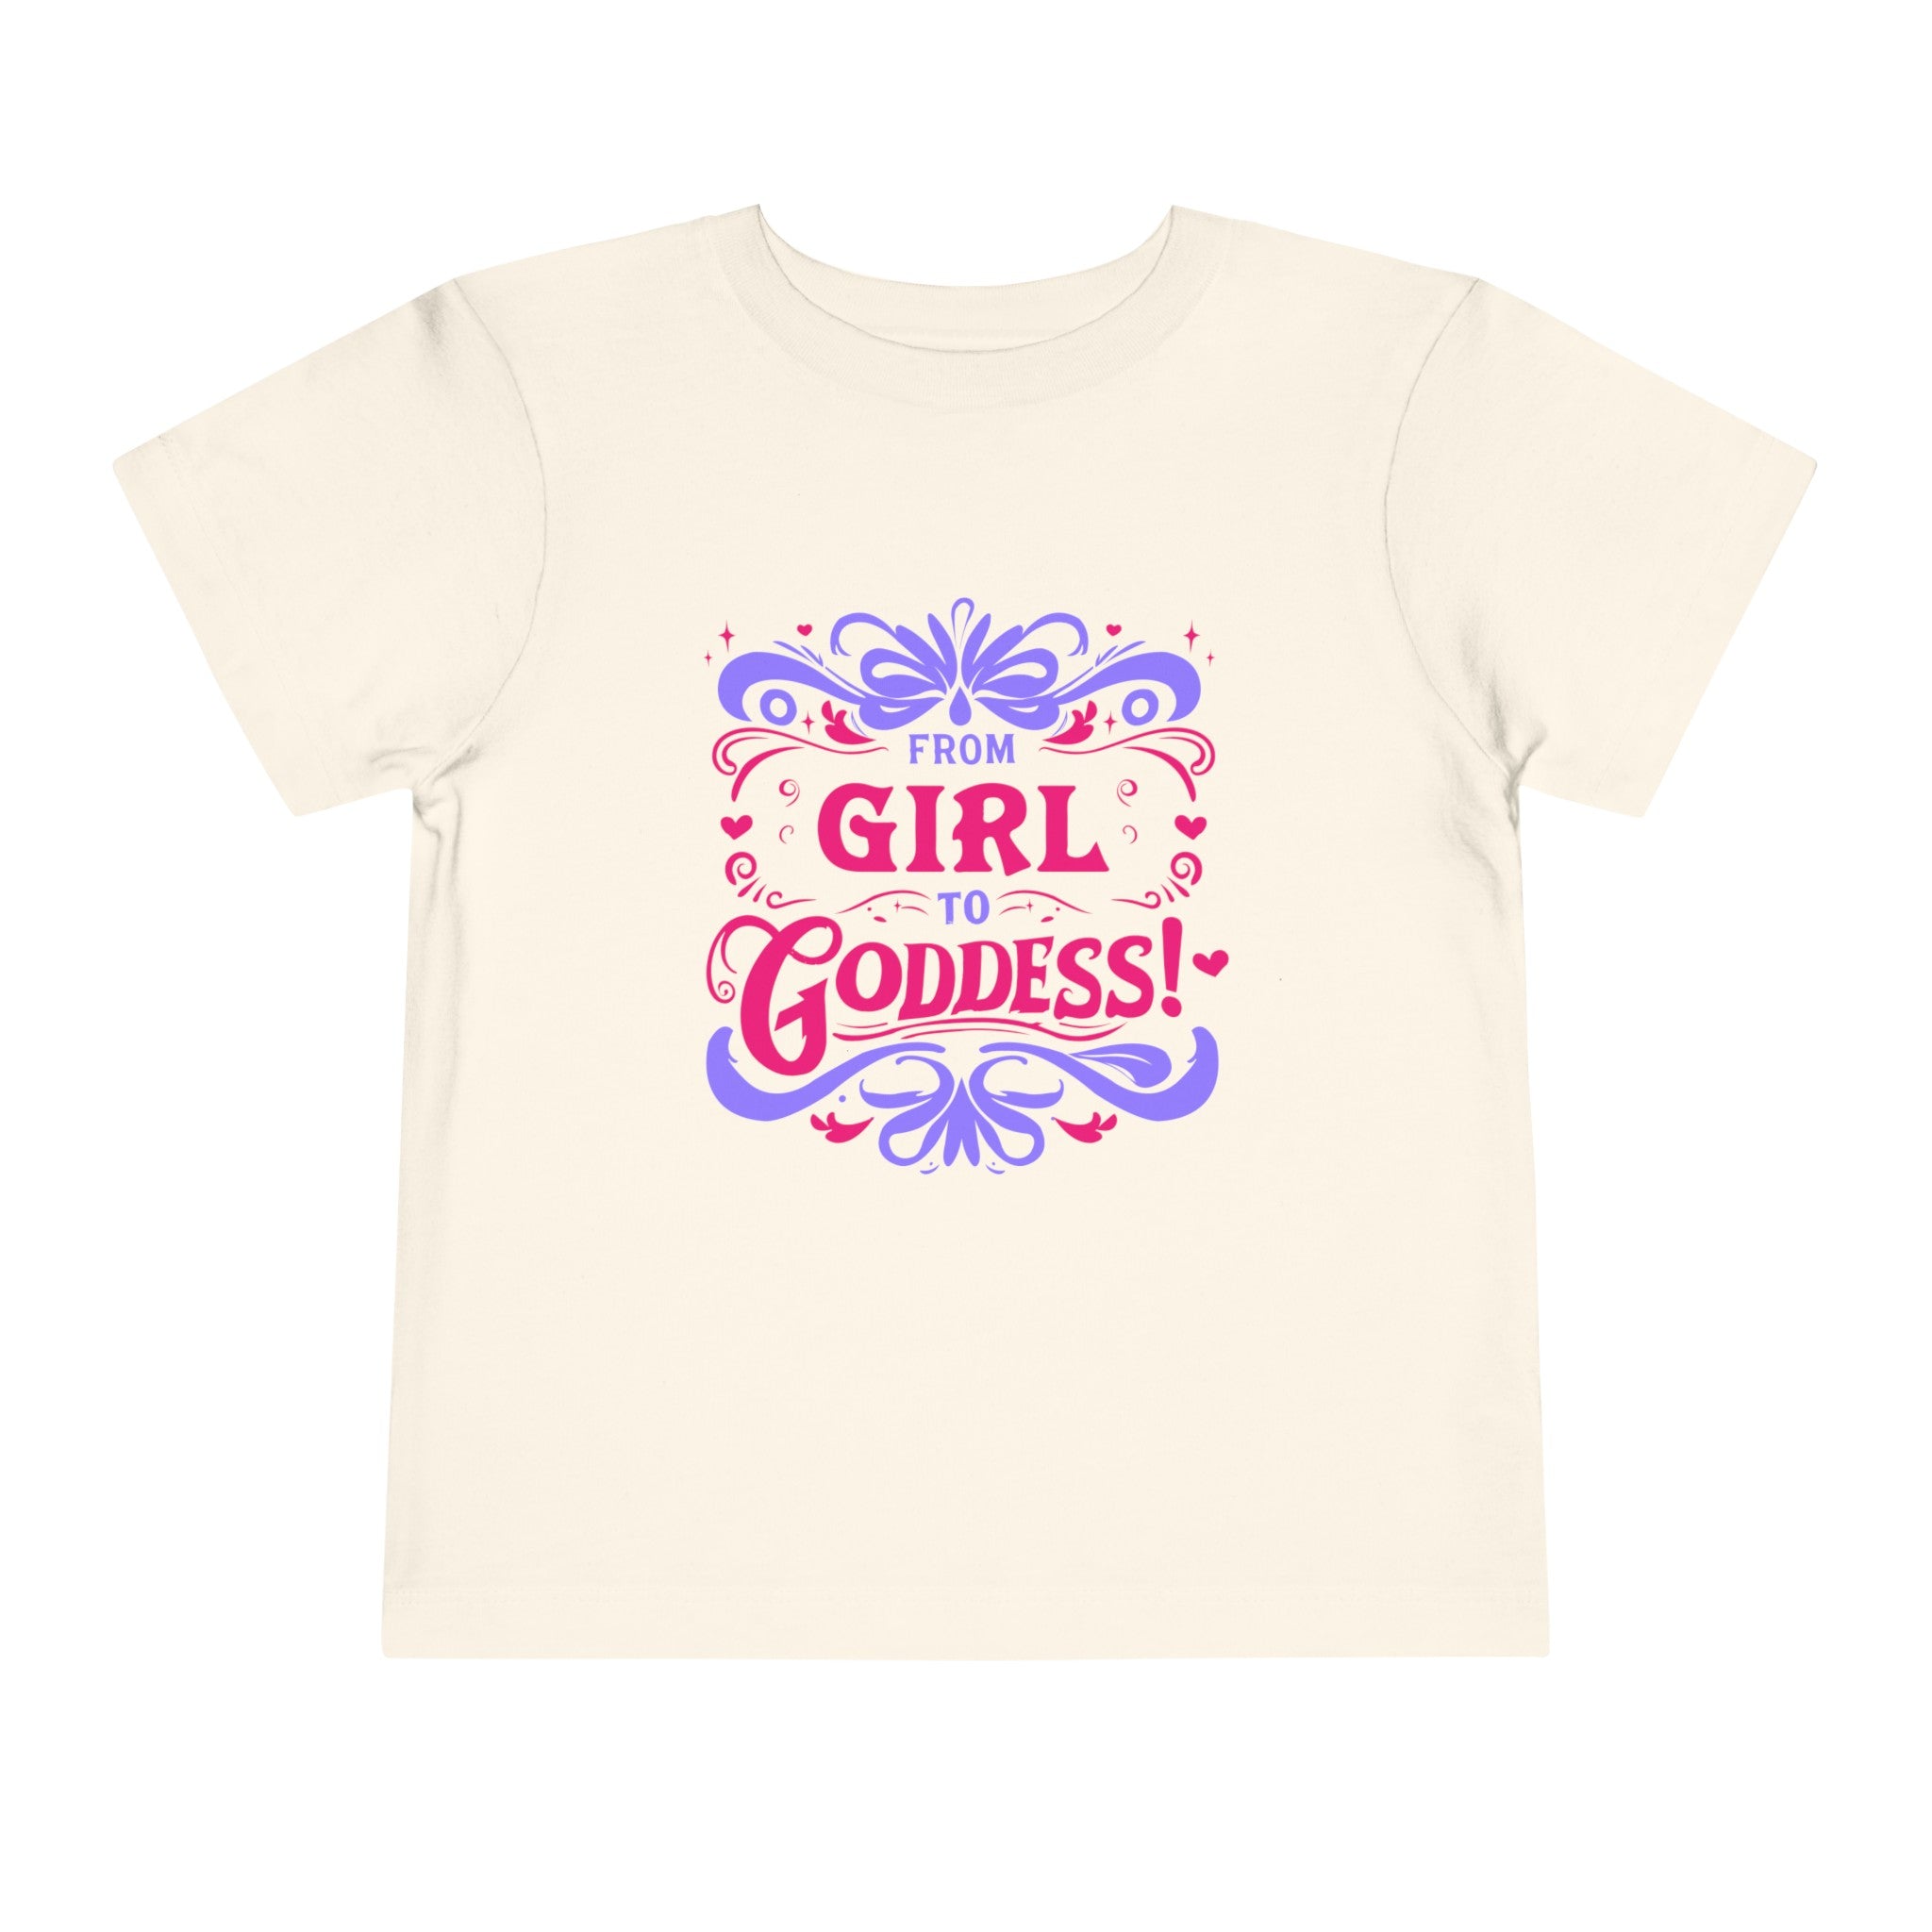 From Girl to Goddess [Toddler Tee]